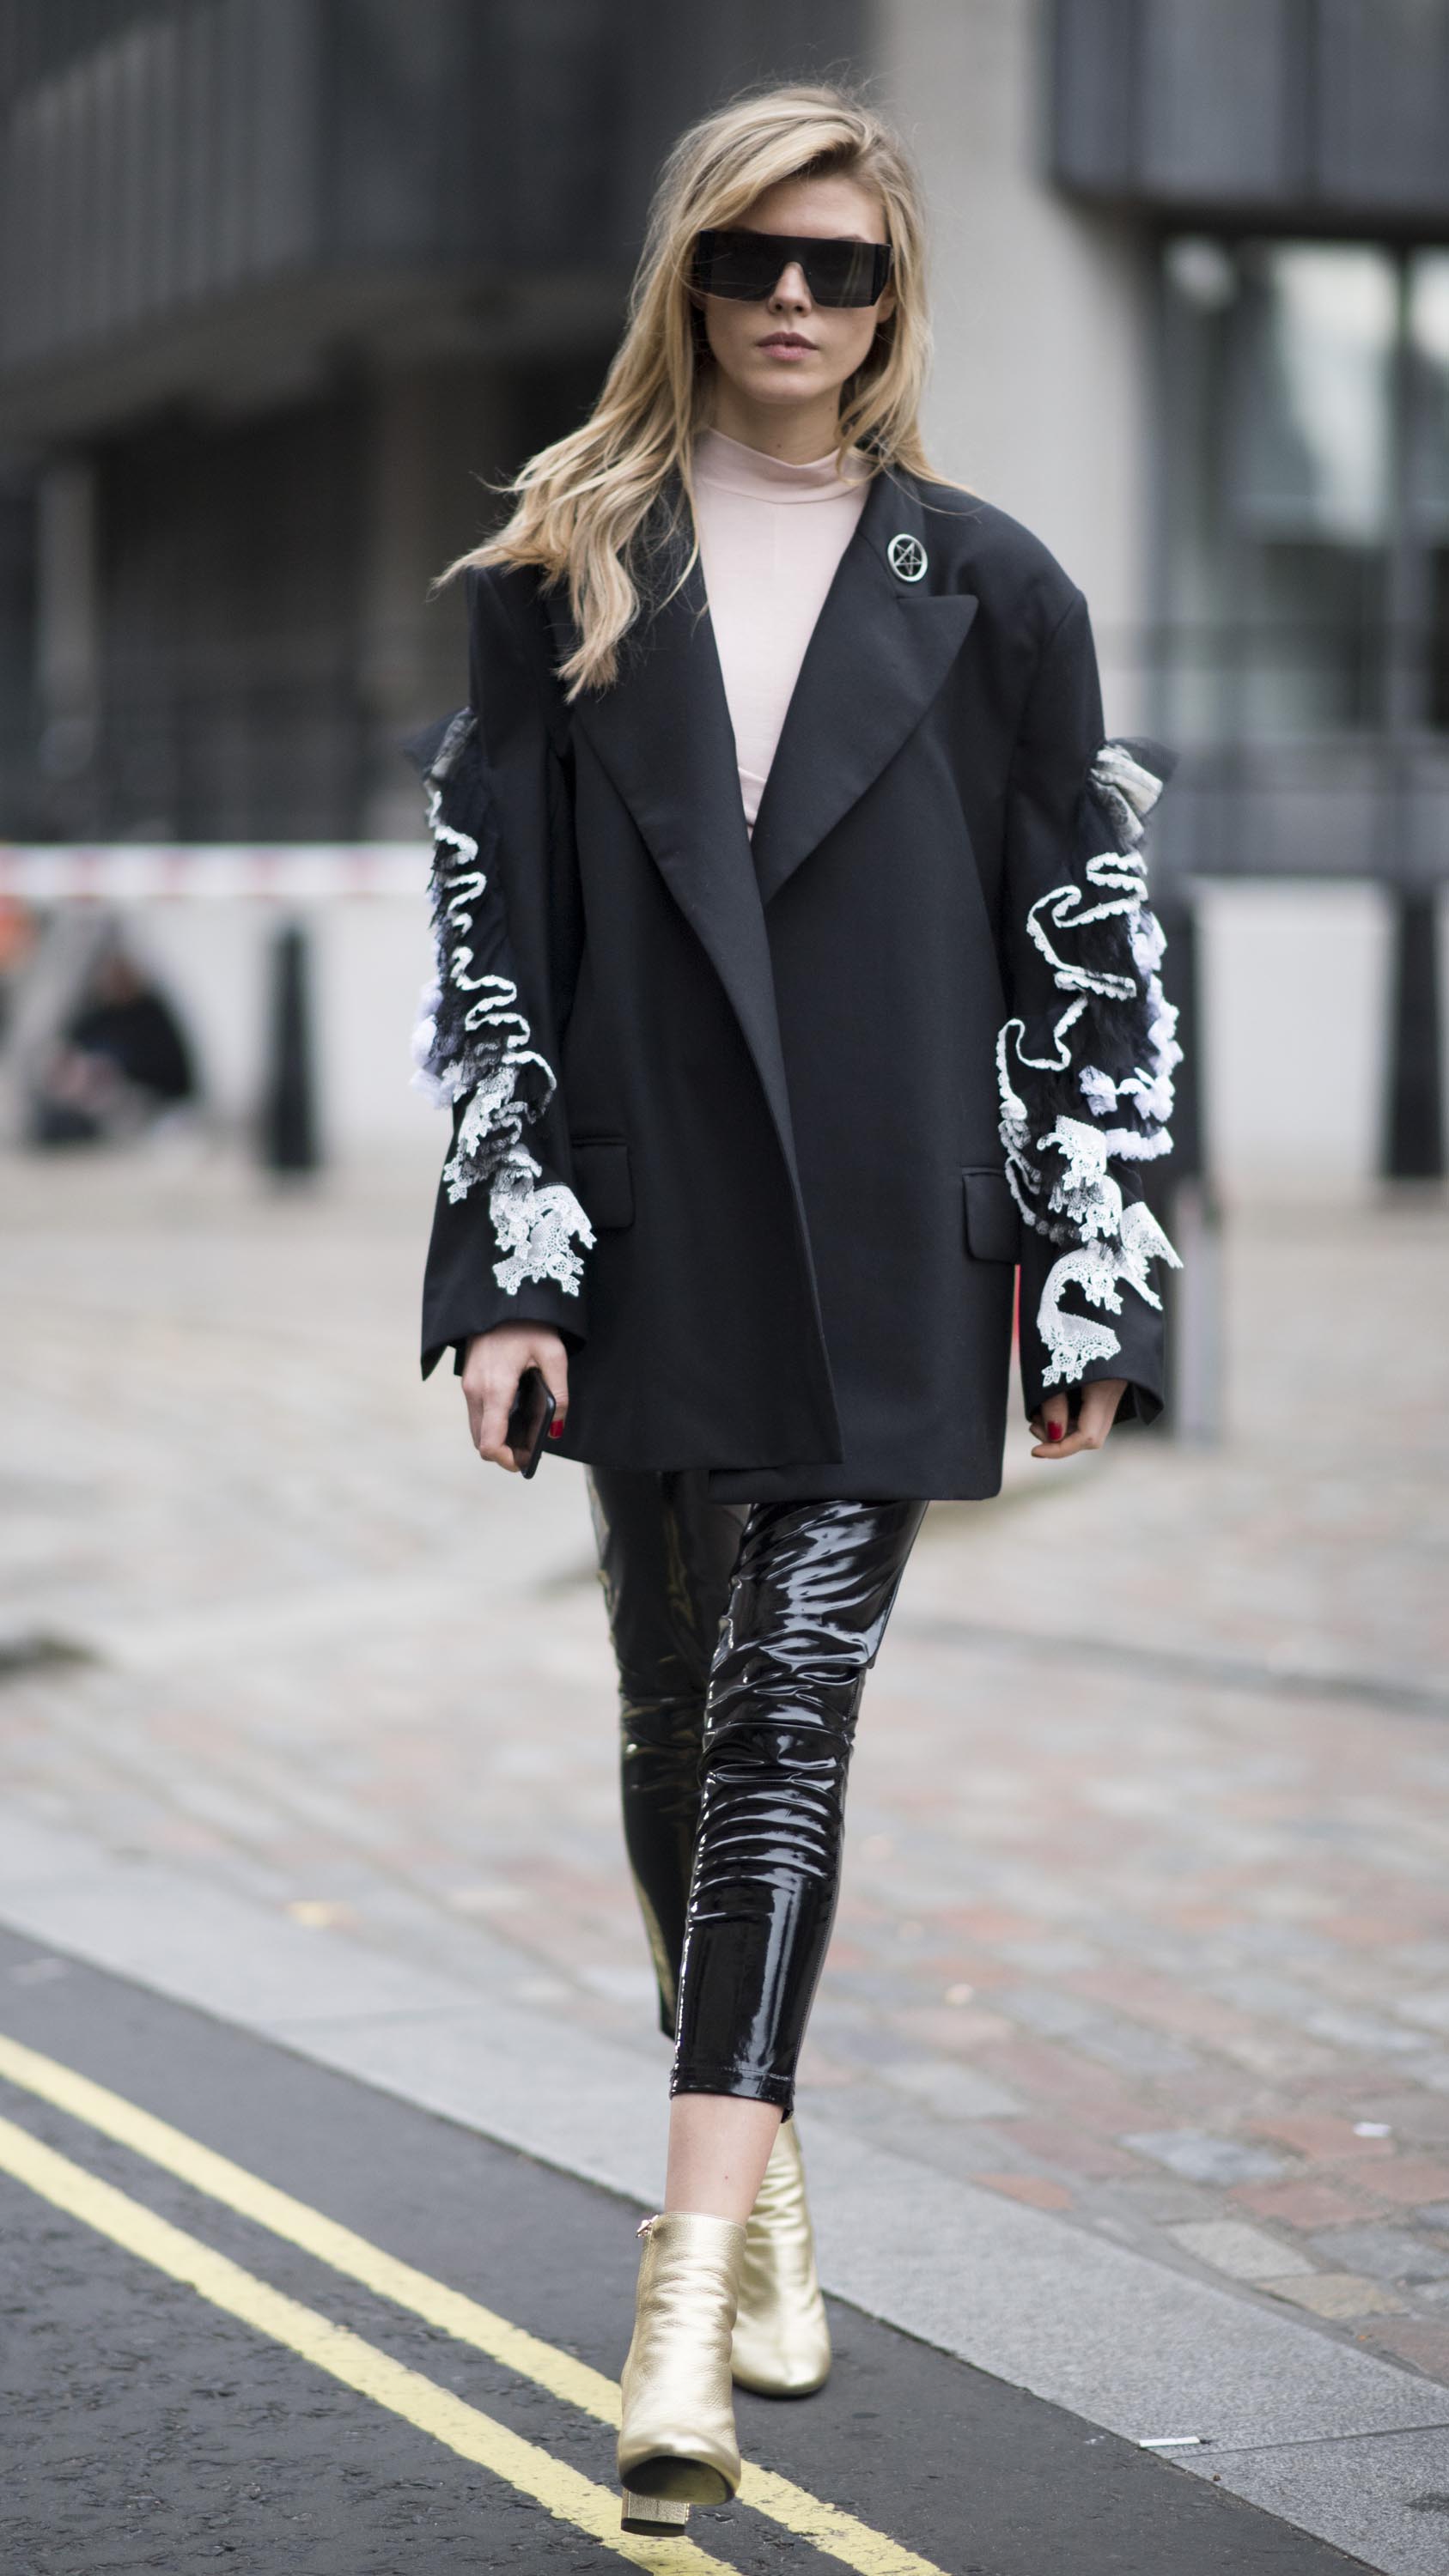 Maryna Lynchuk seen during the London Fashion Week